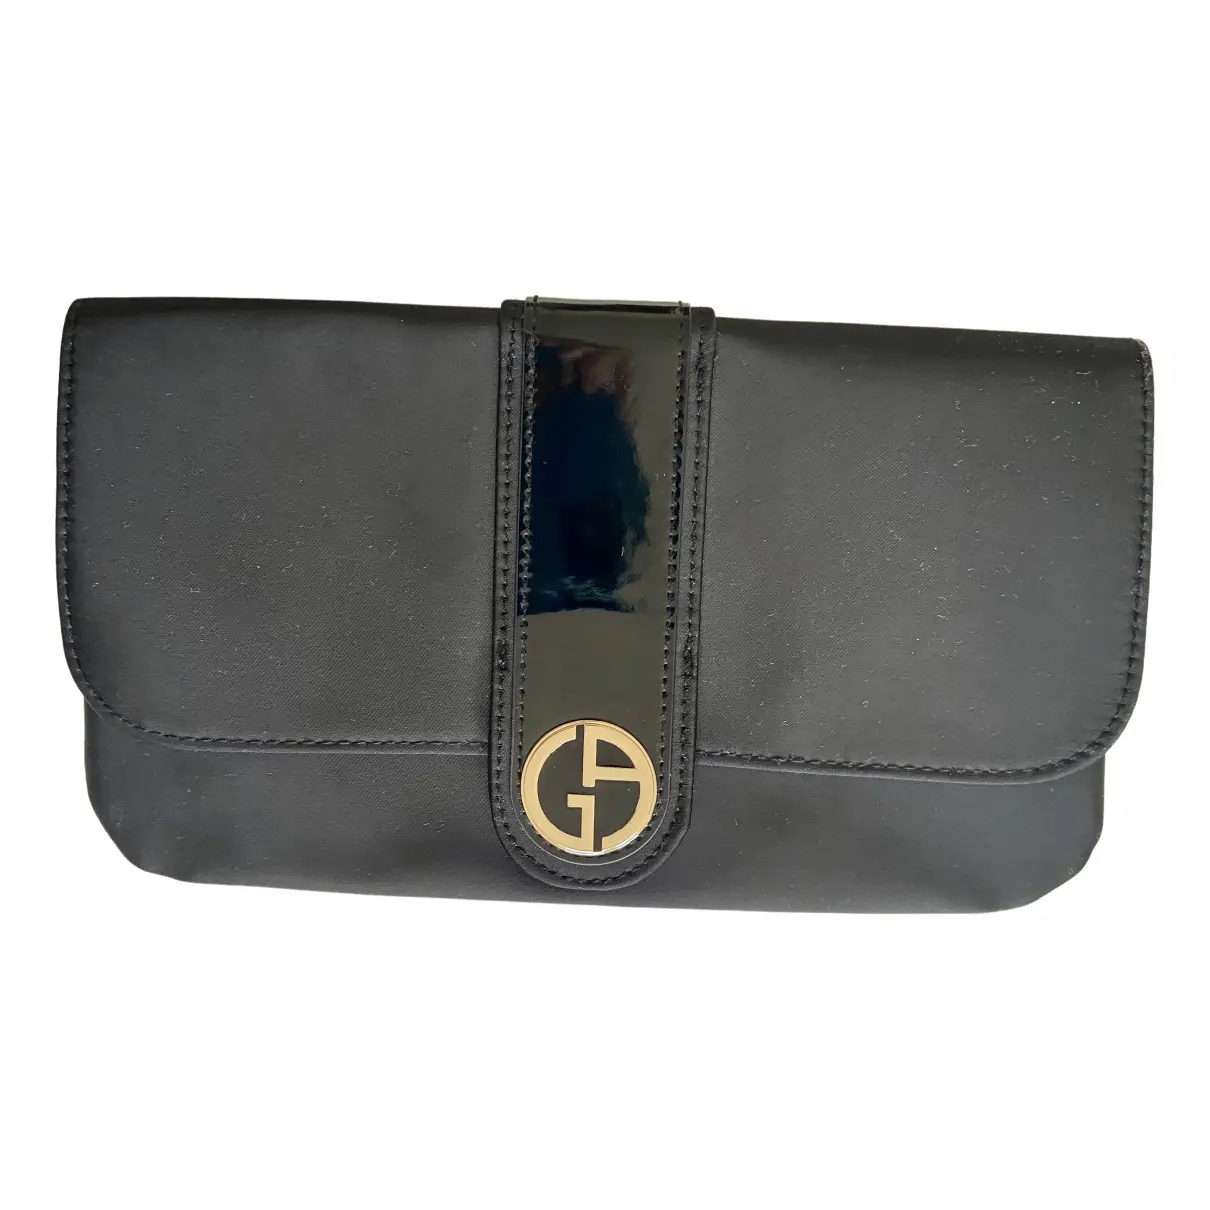 Patent leather clutch bag Giorgio Armani